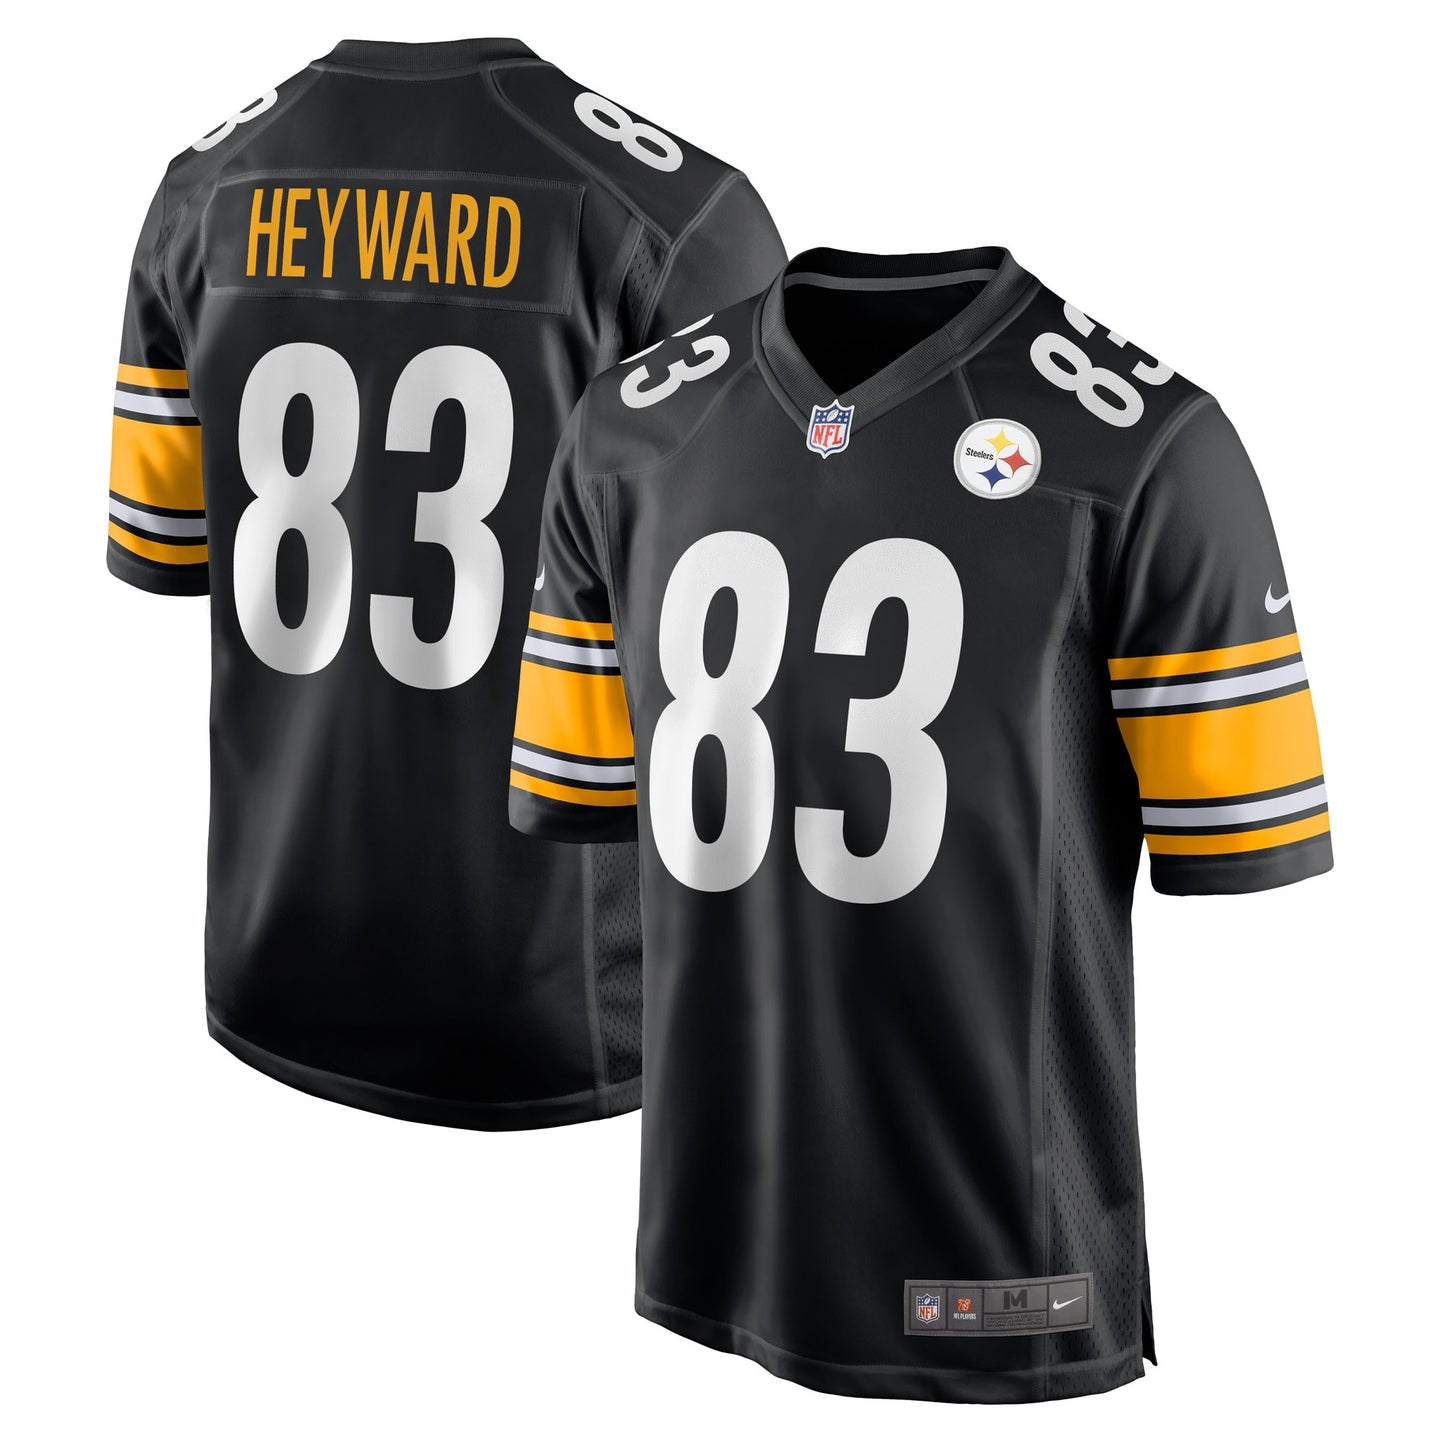 Connor Heyward Pittsburgh Steelers Nike Game Player Jersey - Black